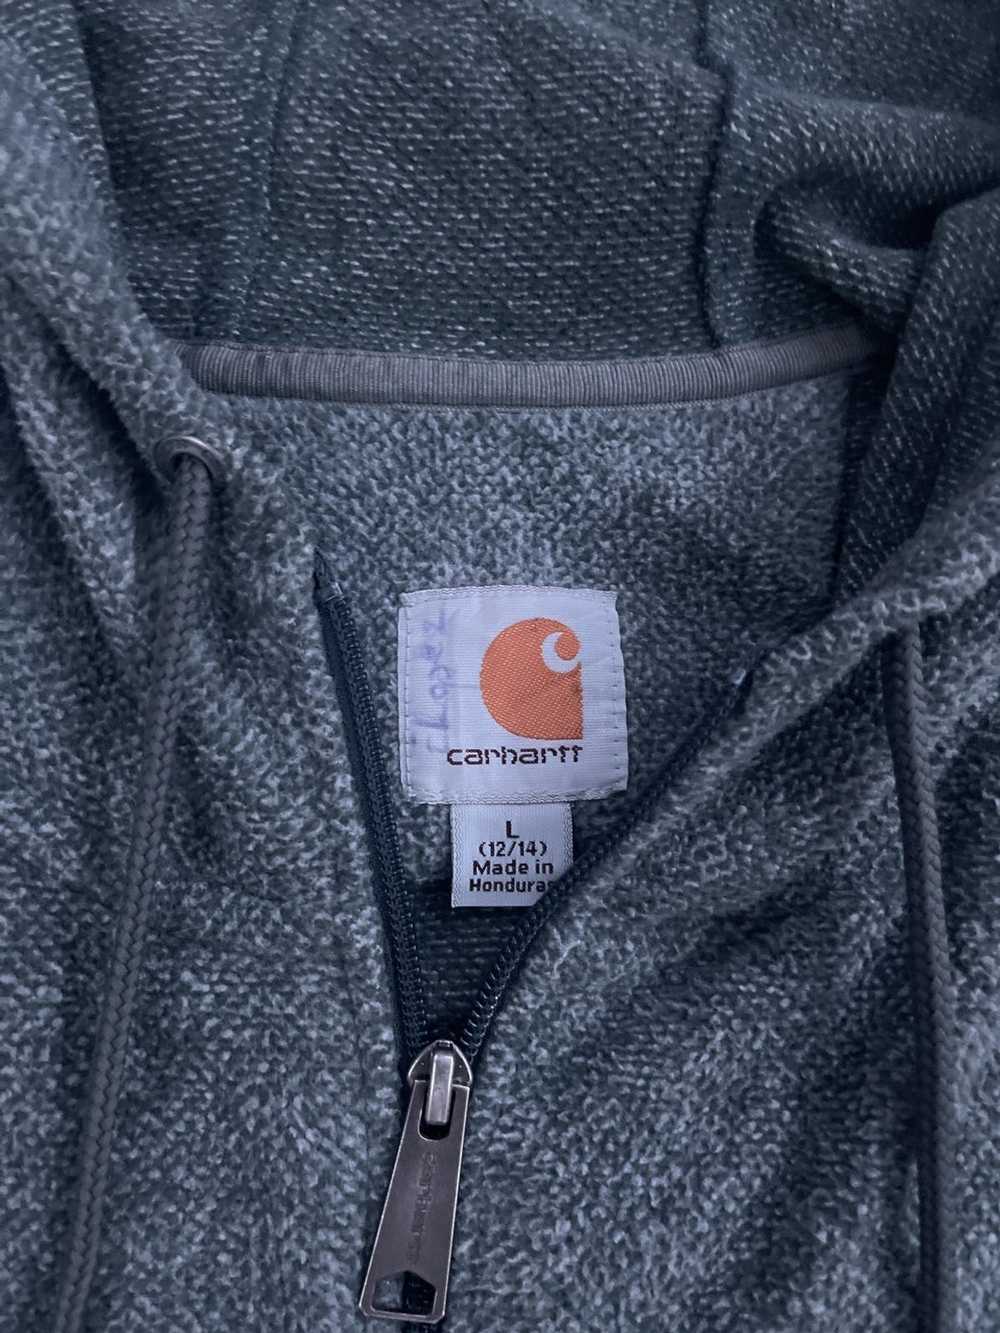 Carhartt Carhartt zip-up hooded jacket - image 5